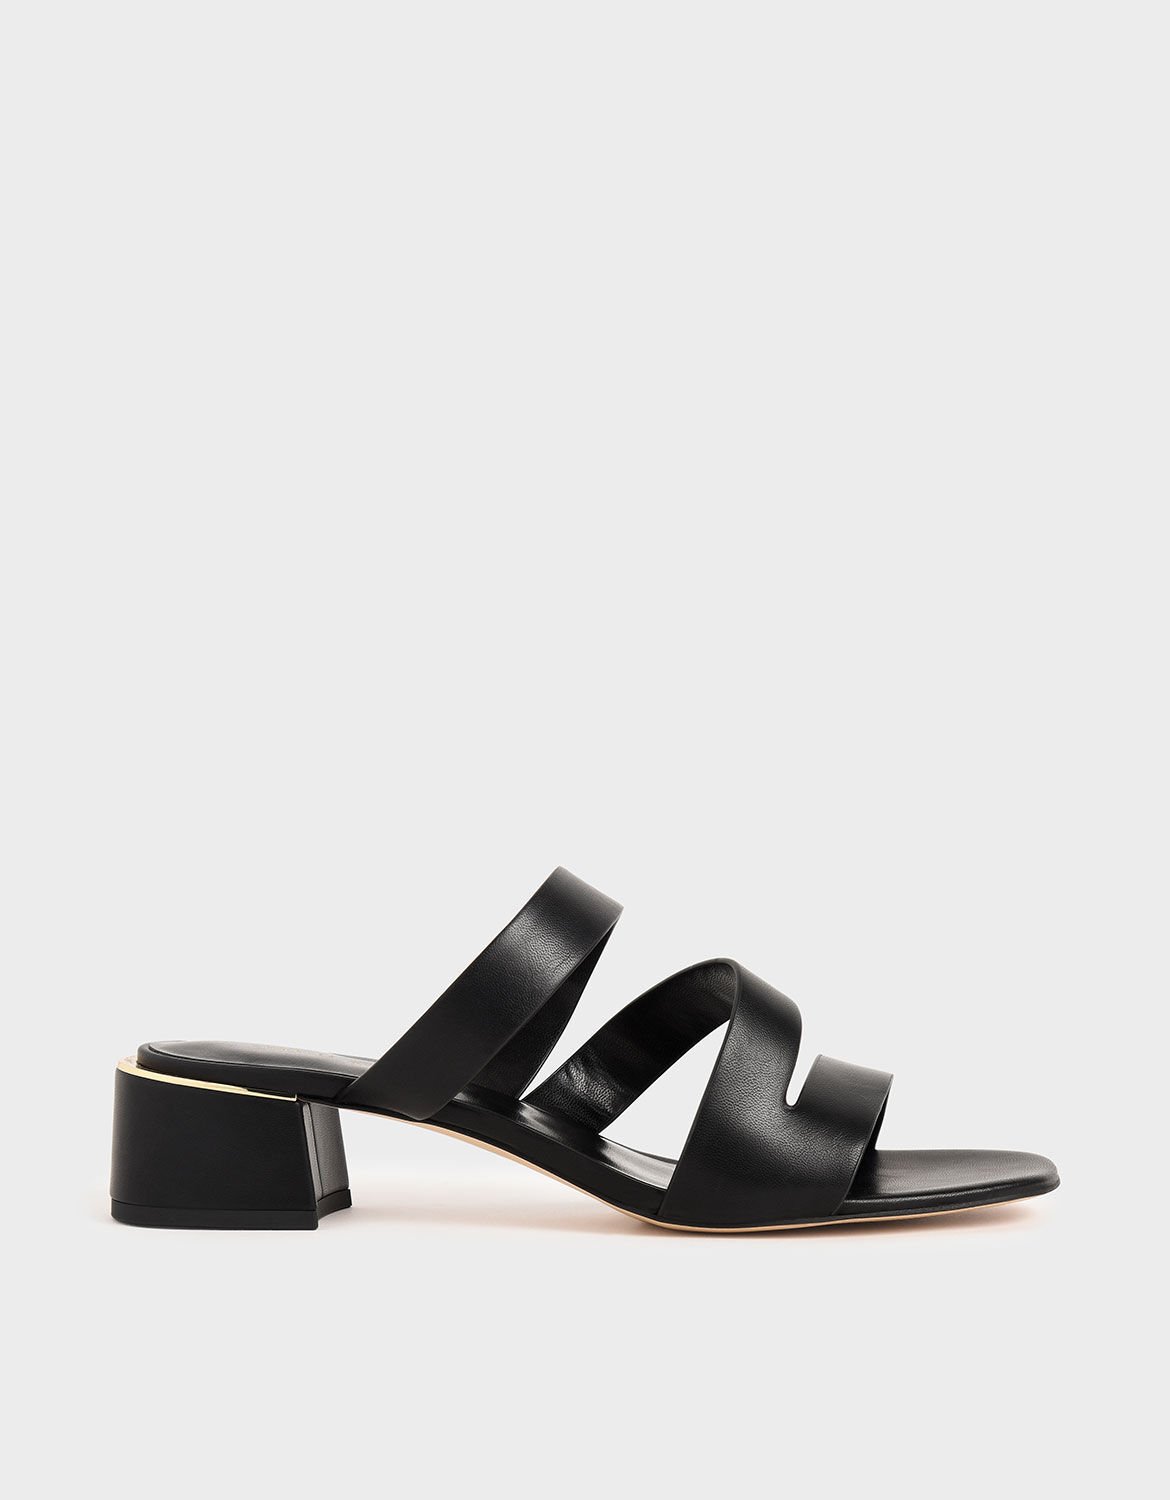 strappy black block heels